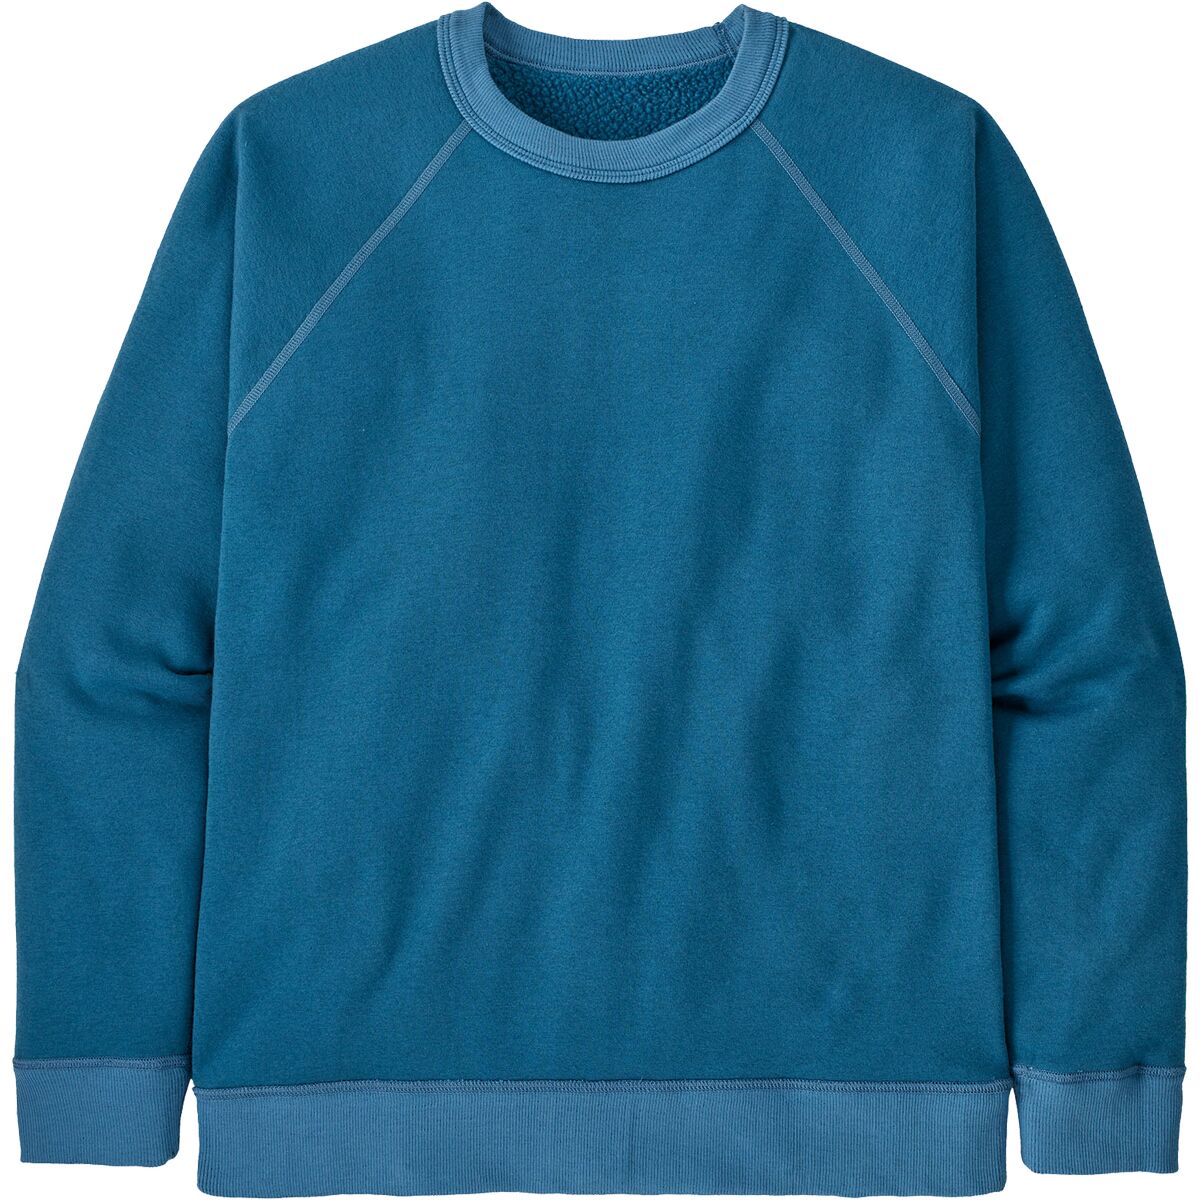 Patagonia Reversible Shearling Crew Sweatshirt - Men's Wavy Blue, XL